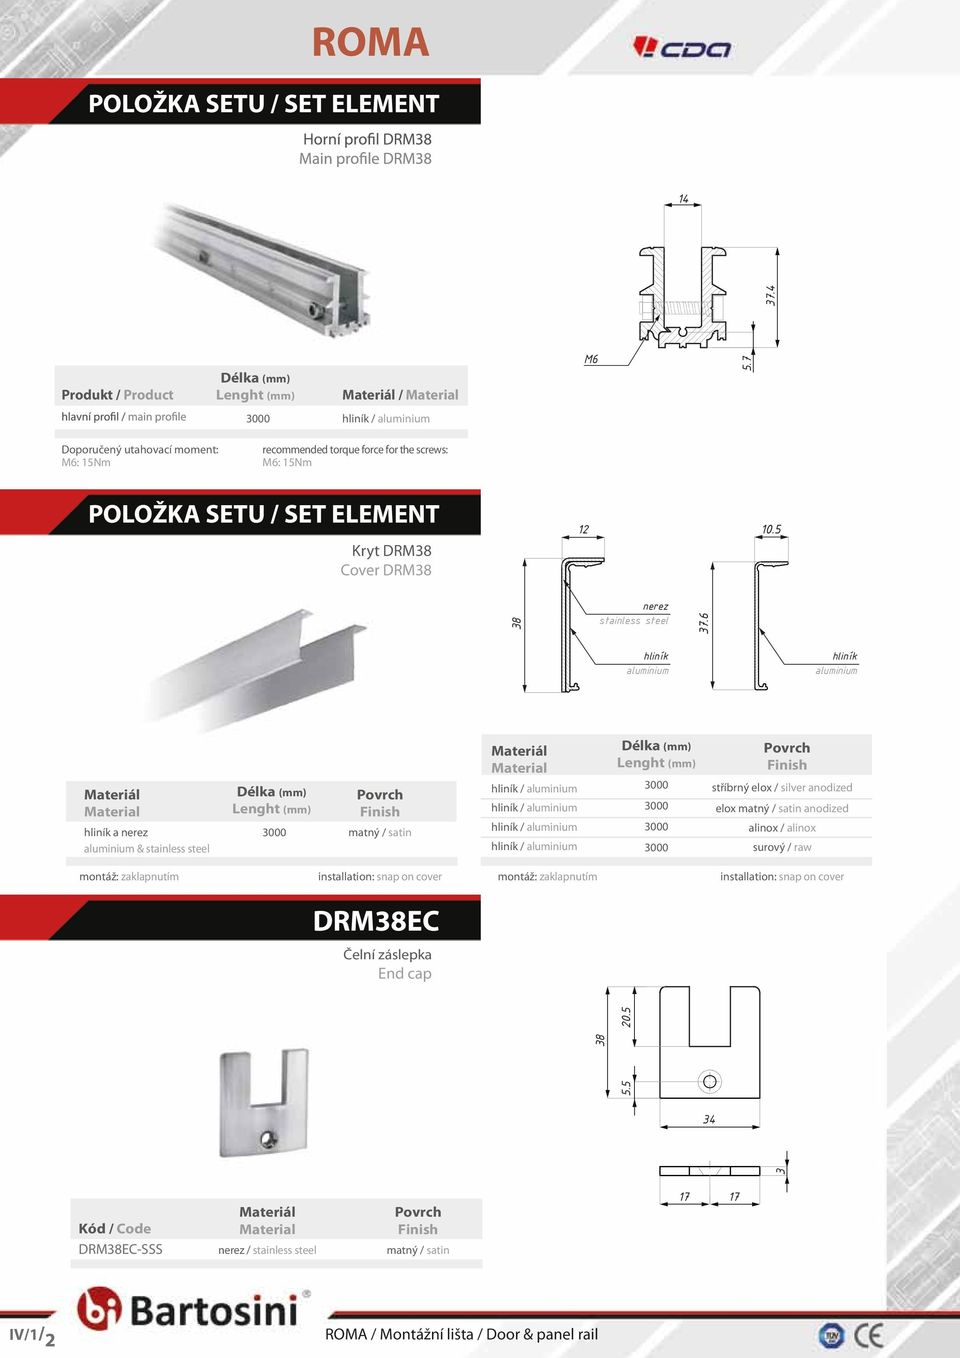 hliník aluminium hliník aluminium Material hliník a nerez aluminium & stainless steel Délka (mm) Lenght (mm) 000 Material hliník / aluminium hliník / aluminium hliník / aluminium